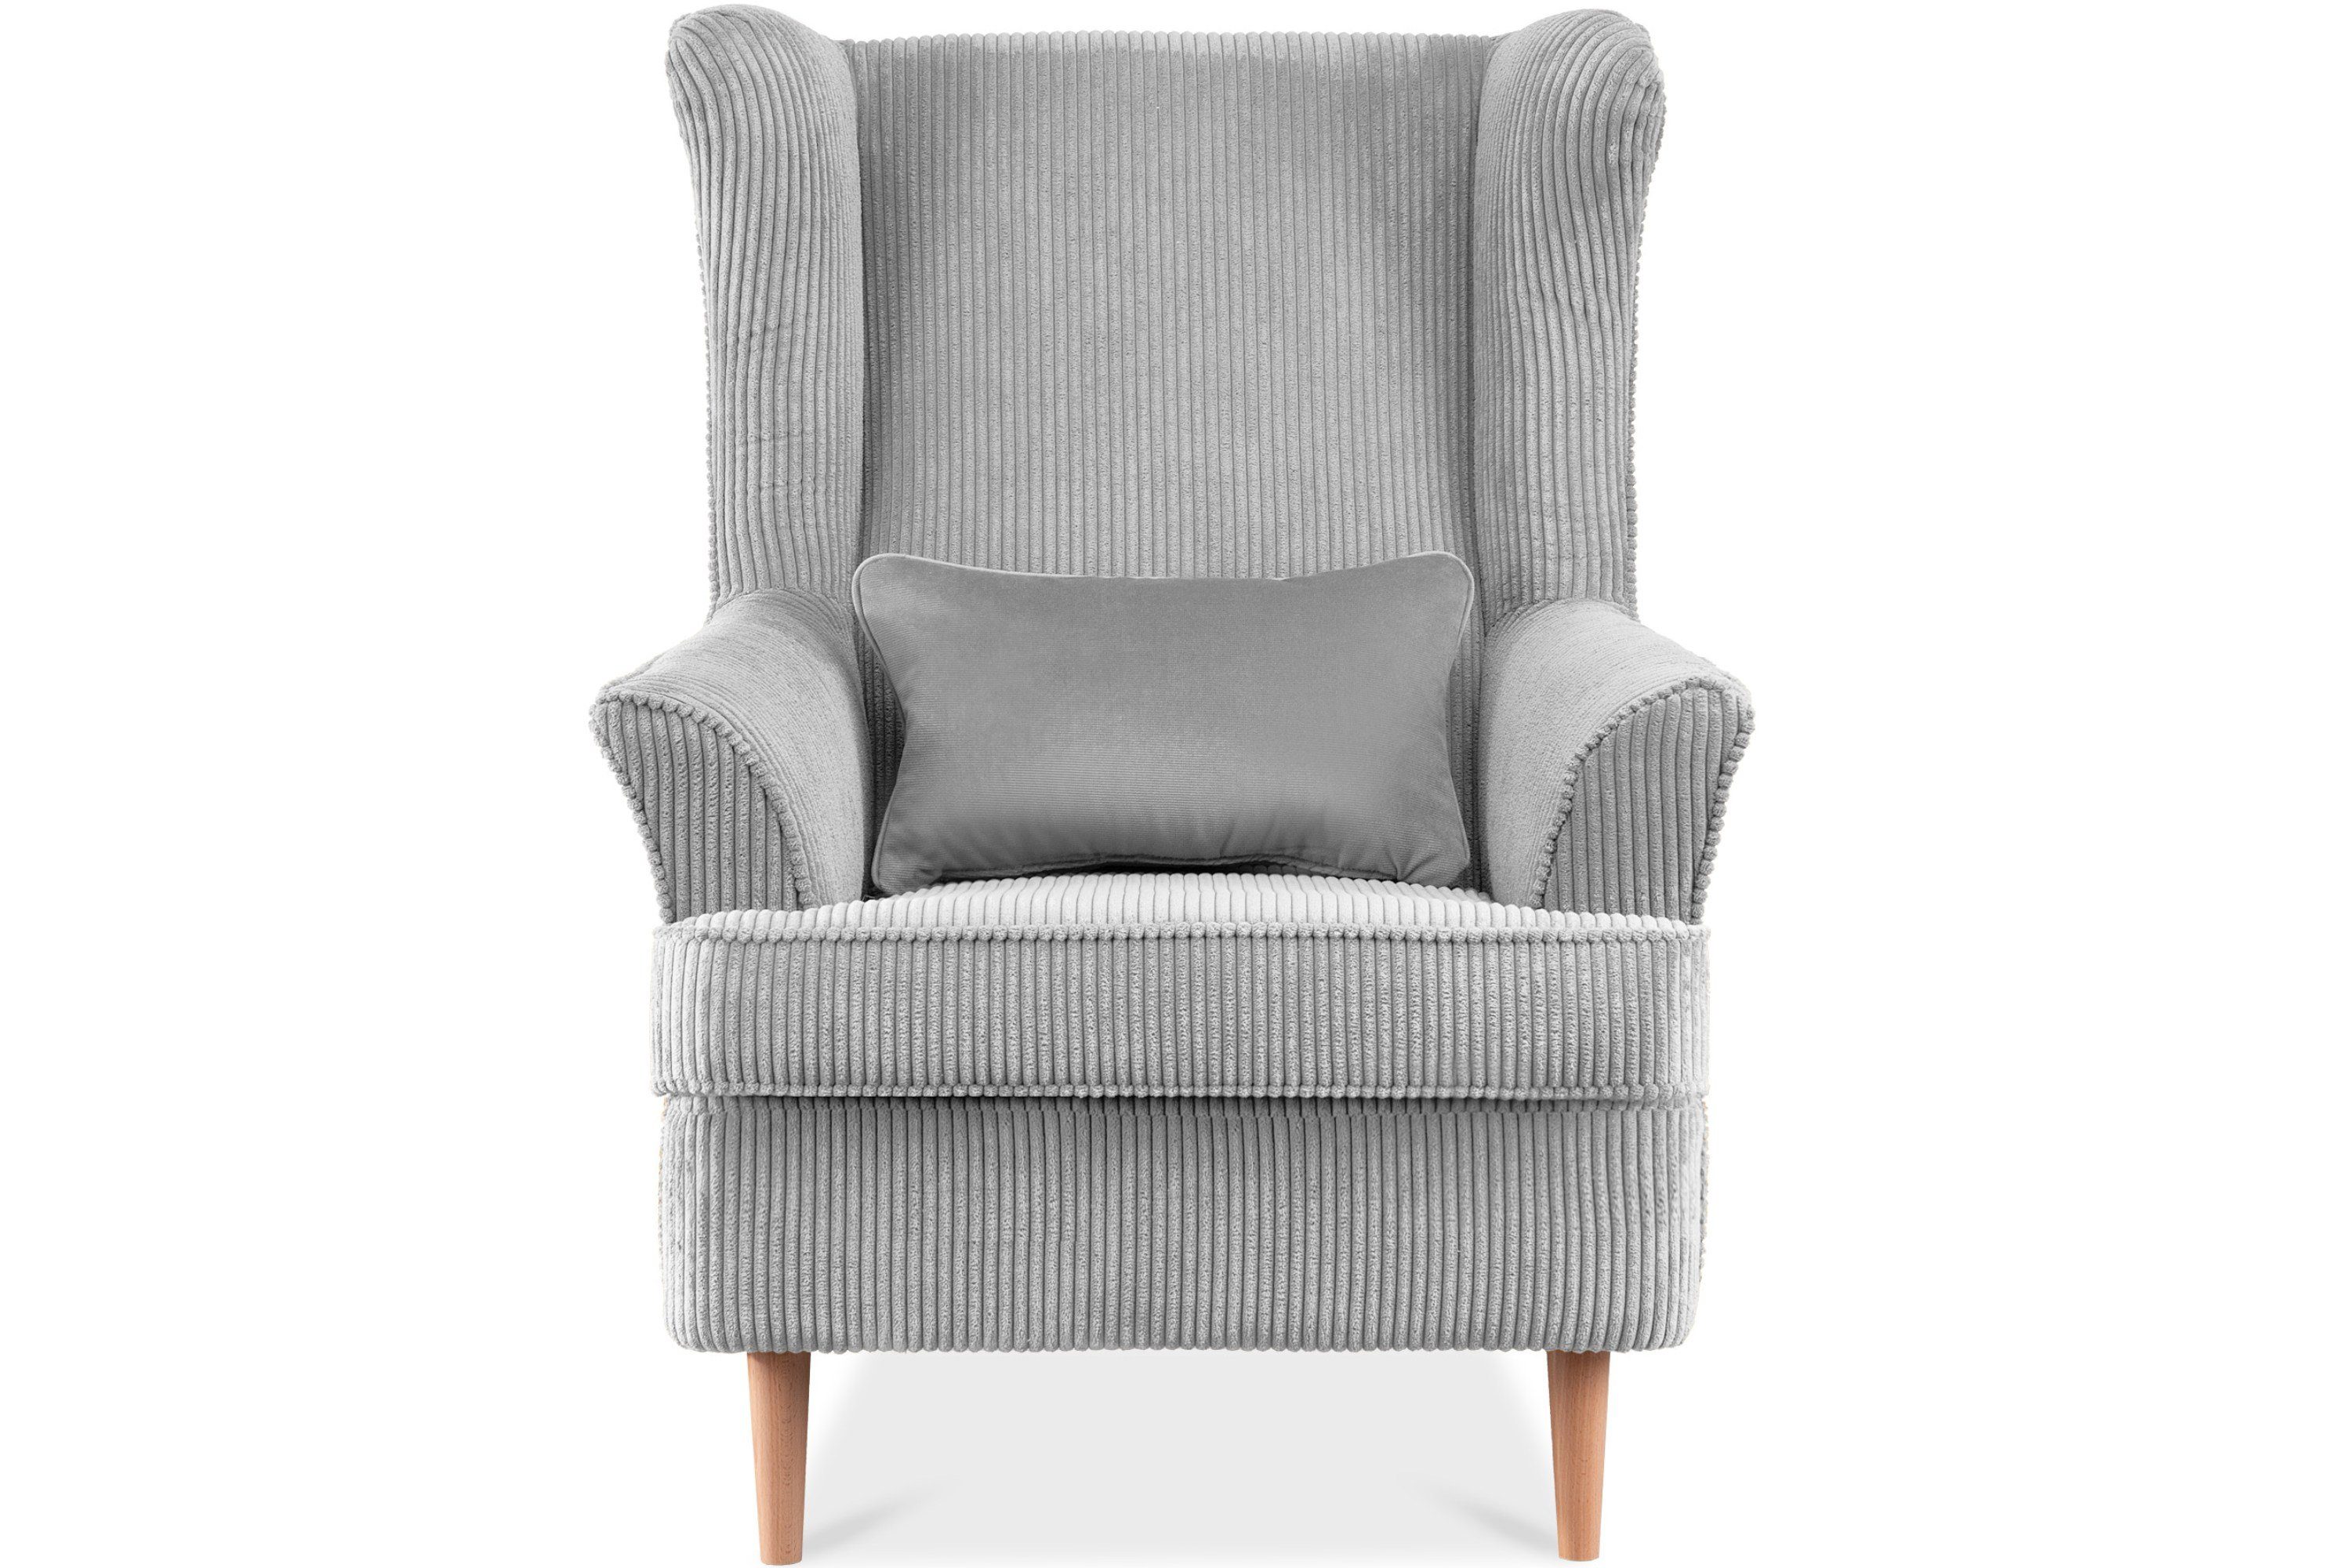 Konsimo Ohrensessel STRALIS Sessel, zeitloses dekorativem hohe Füße, Kissen inklusive Design